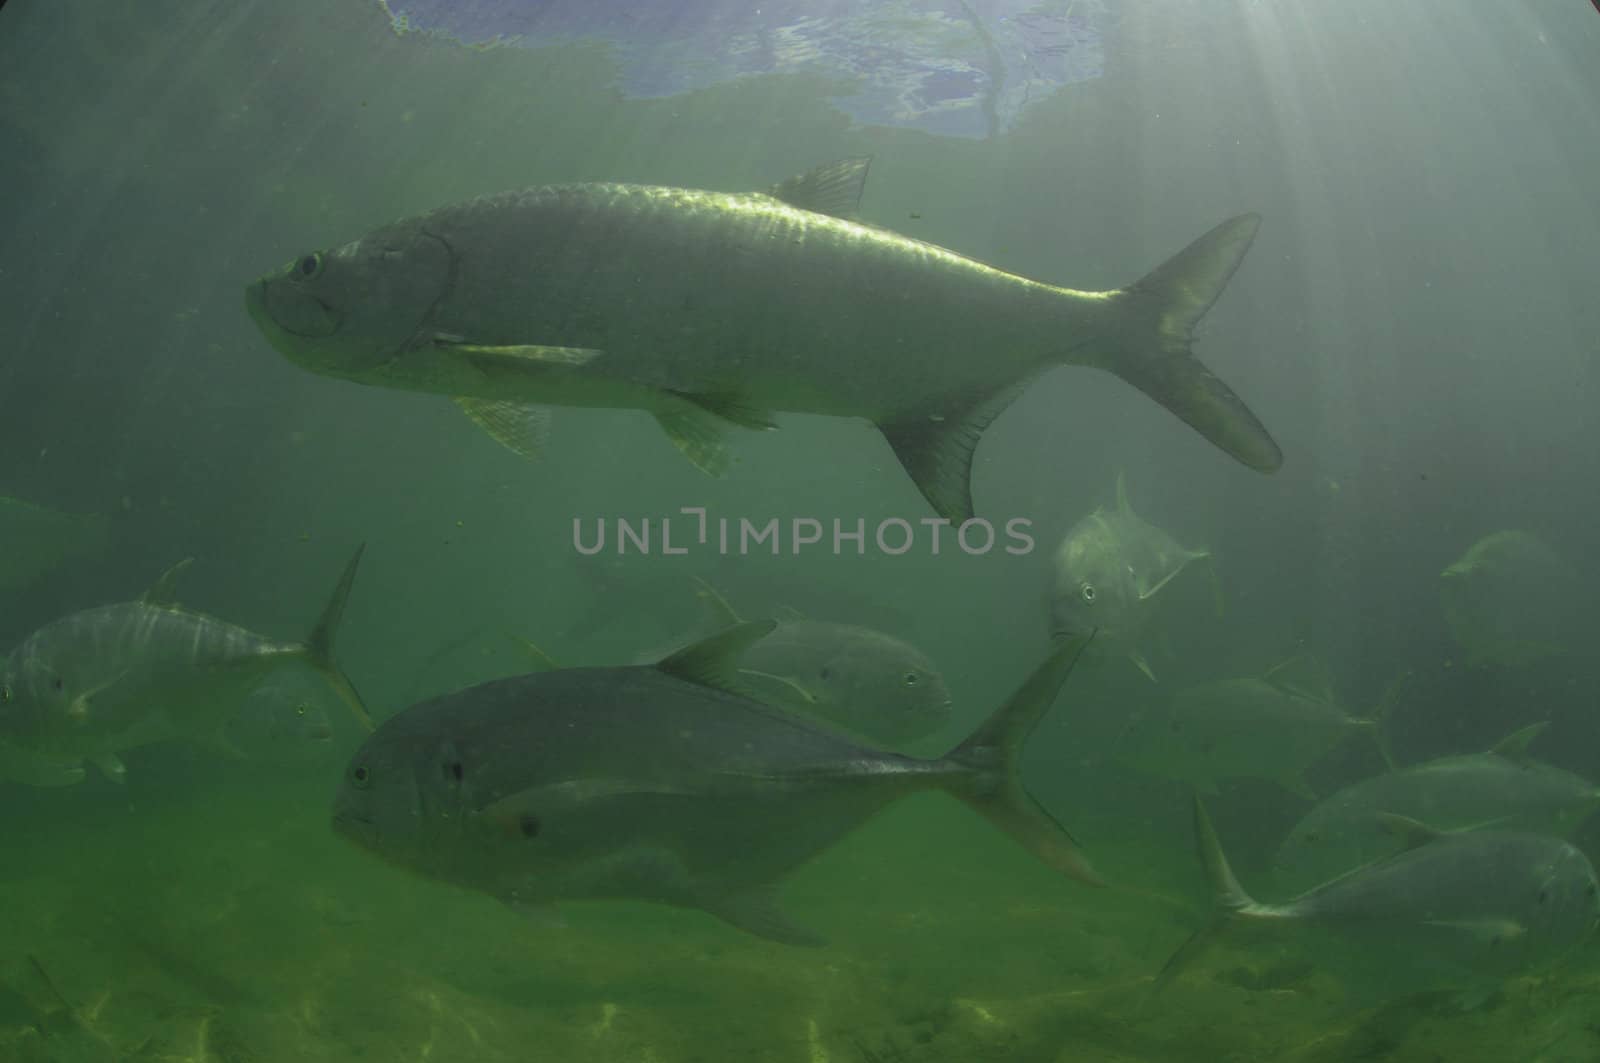 Tarpon fish and Jack fish swimming underwater in the Atlantic Oc by ftlaudgirl